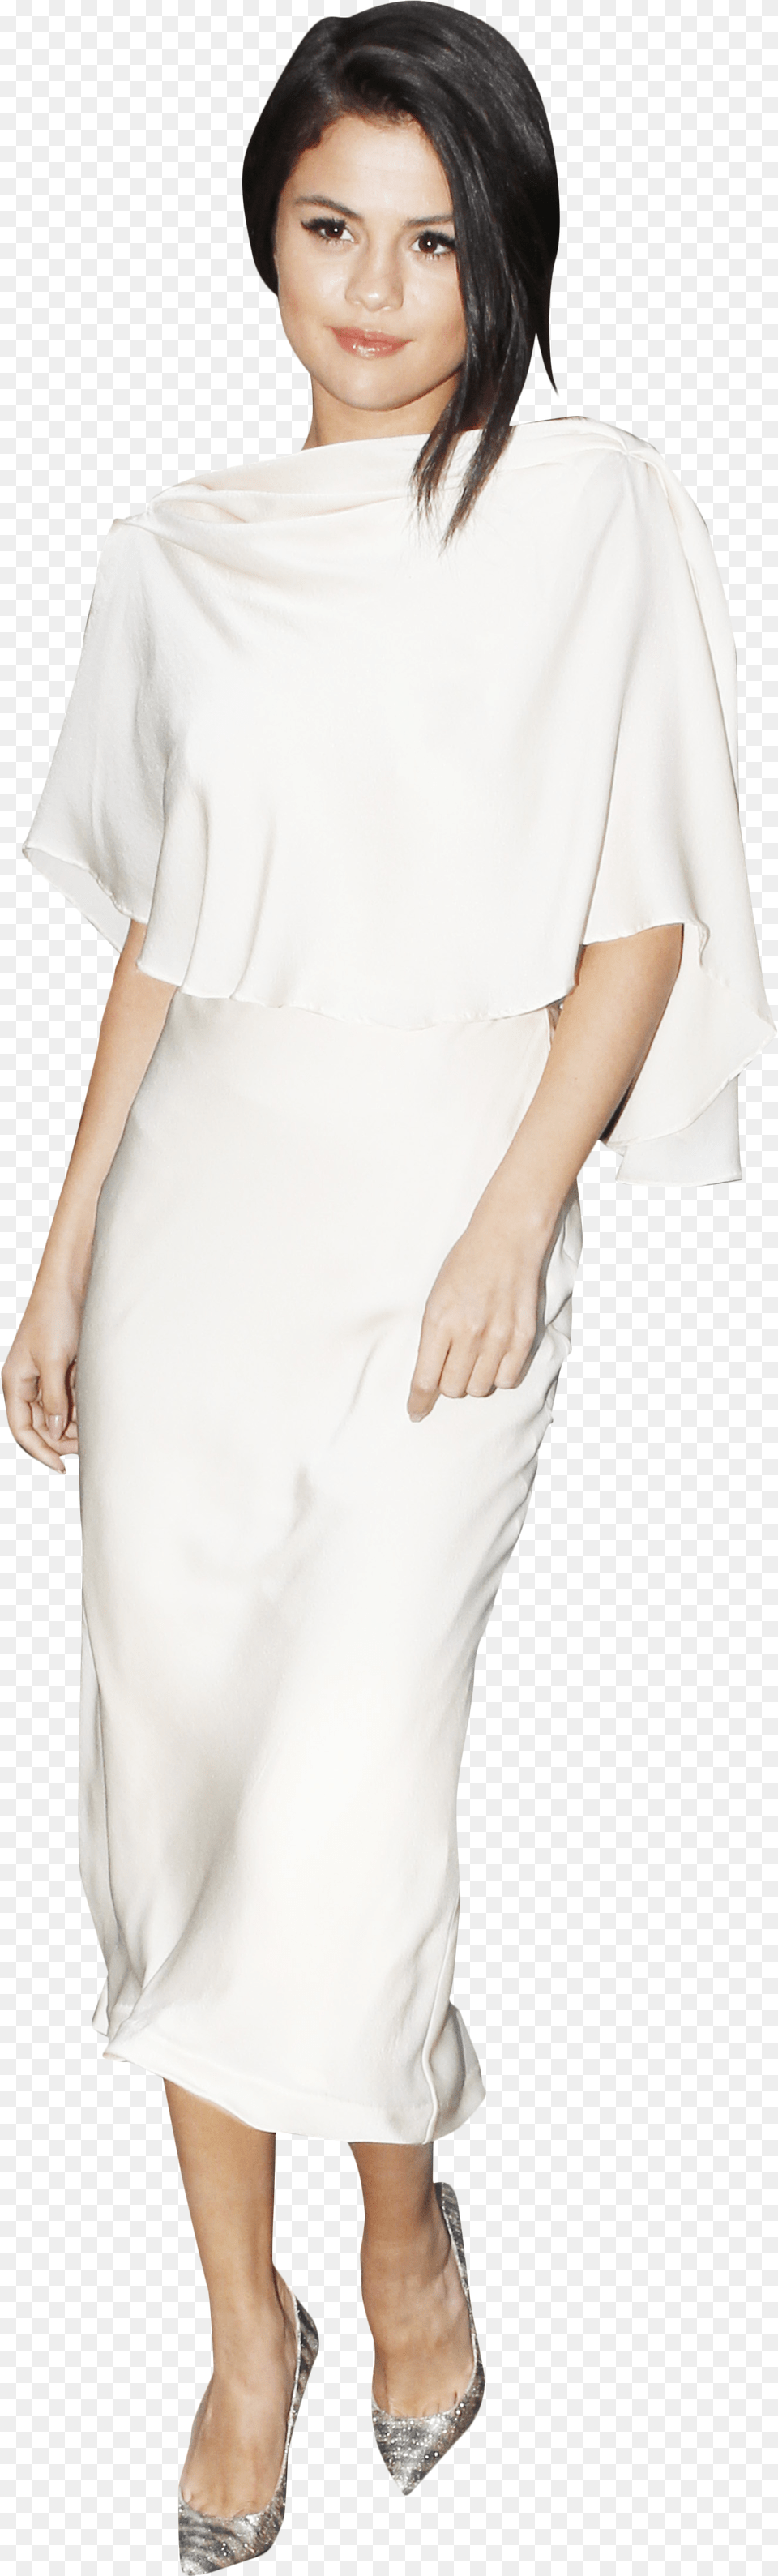 Selena Gomez White Dress Dress Portable Network Graphics, Adult, Shoe, Person, Footwear Png Image